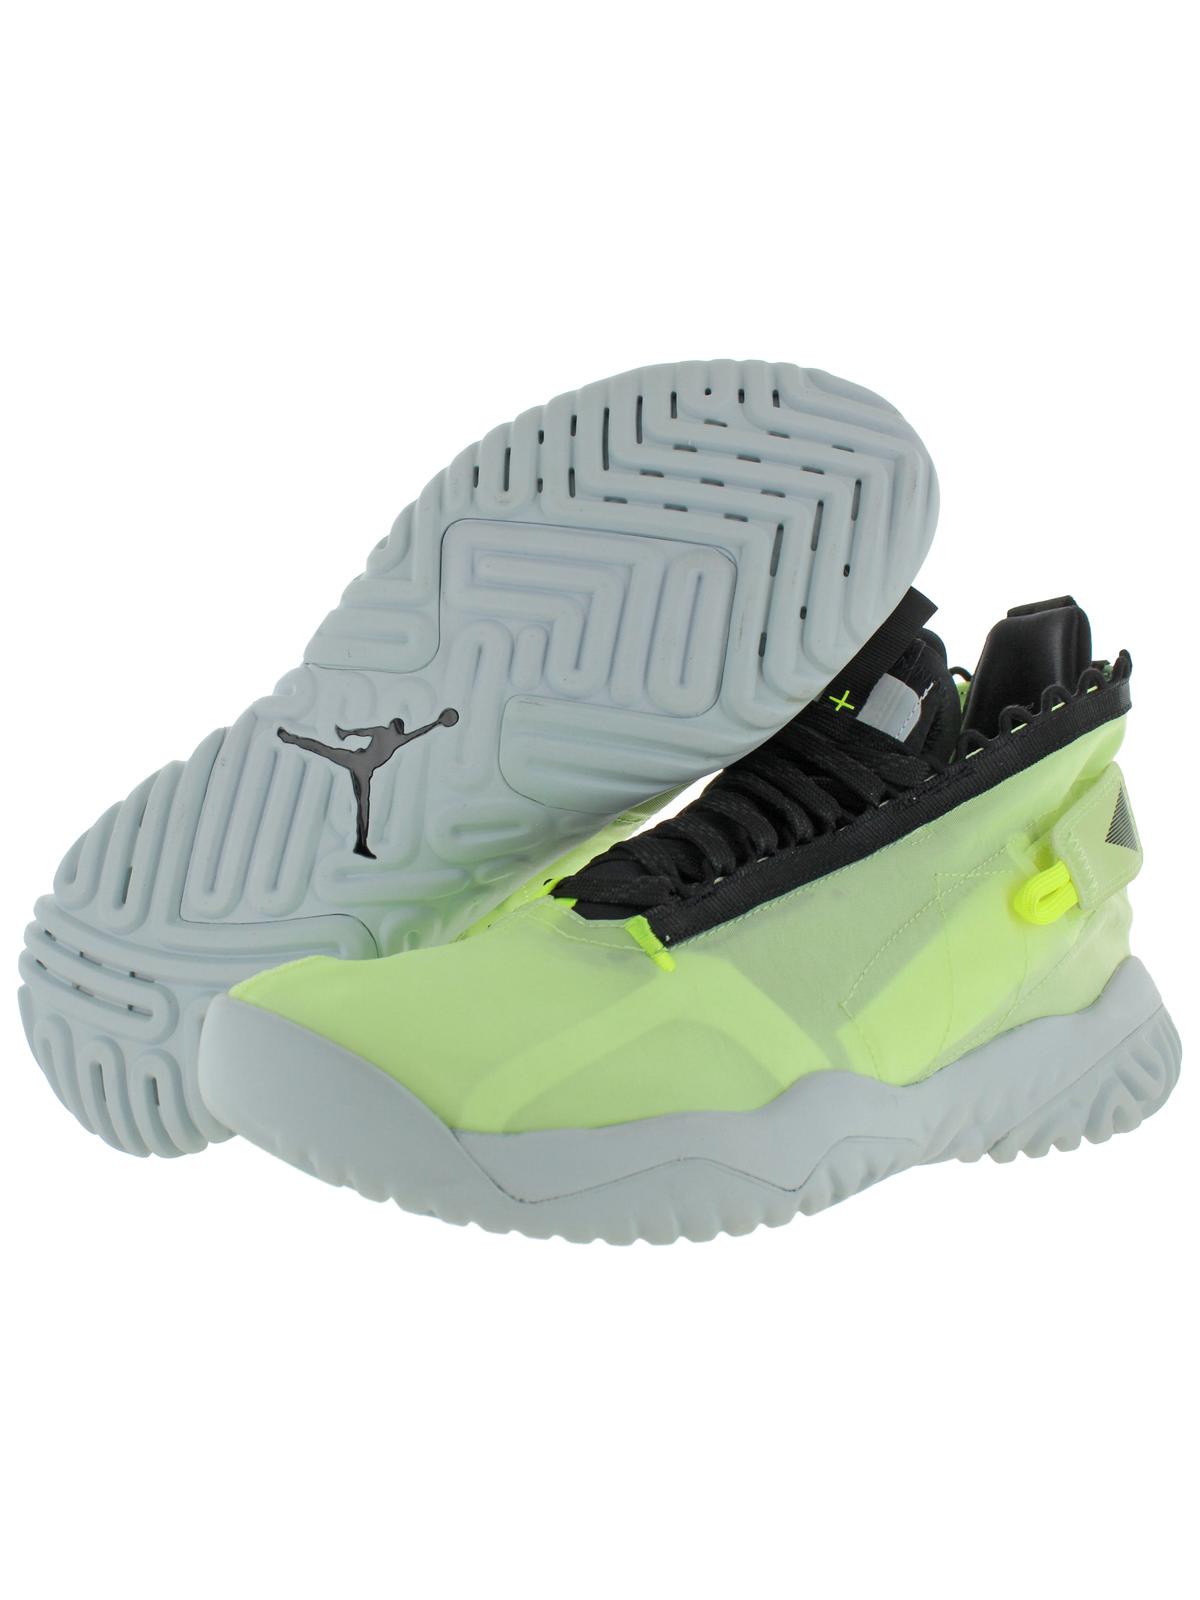 Nike Air Jordan Mens Proto-React Athletic Basketball Shoes Volt BV1654 700 New (12) - image 2 of 2